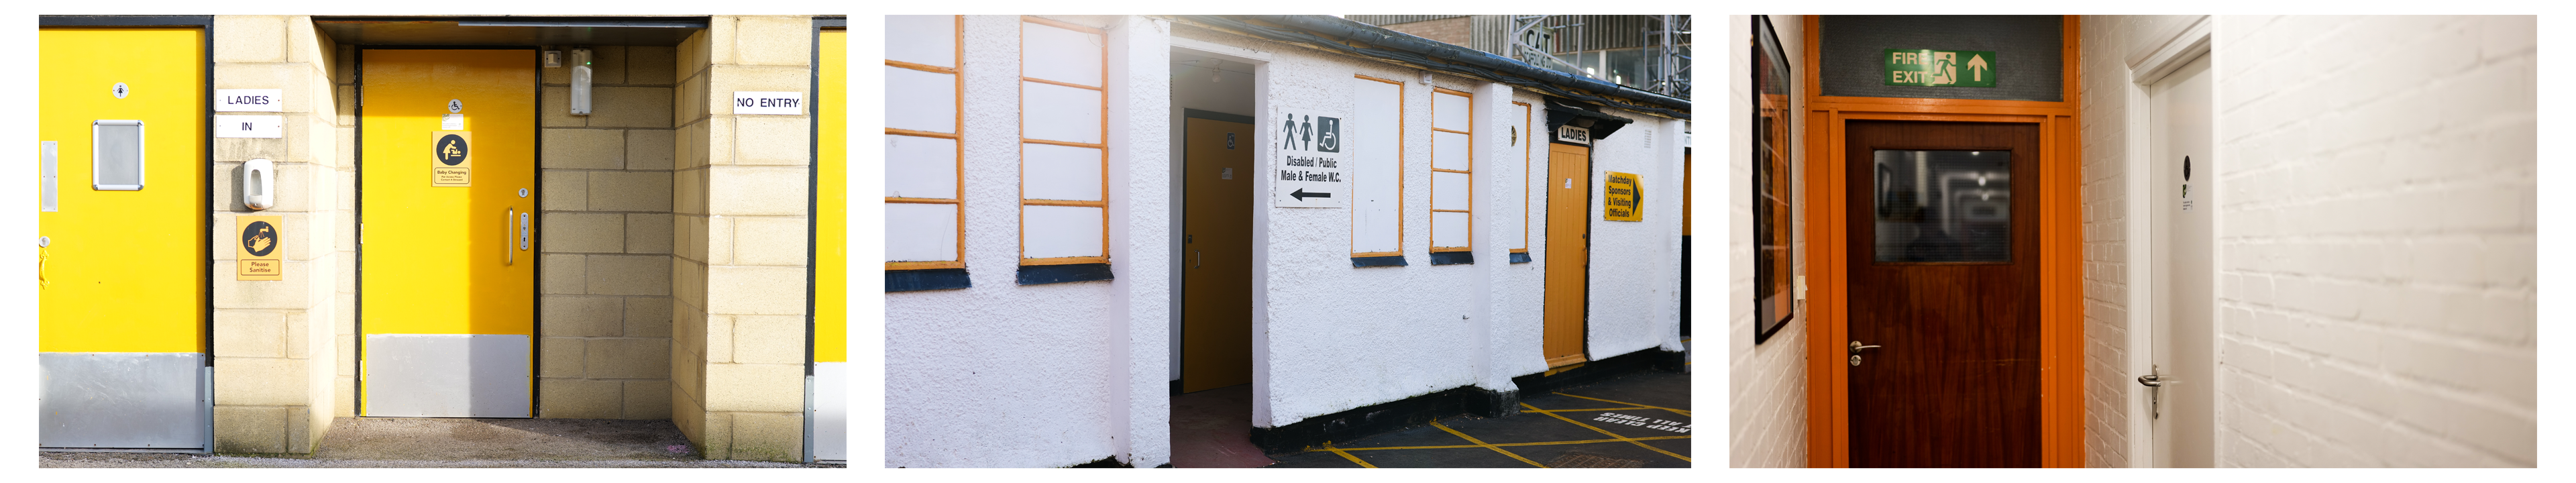 Accessibility toilets at the Cledara Abbey Stadium